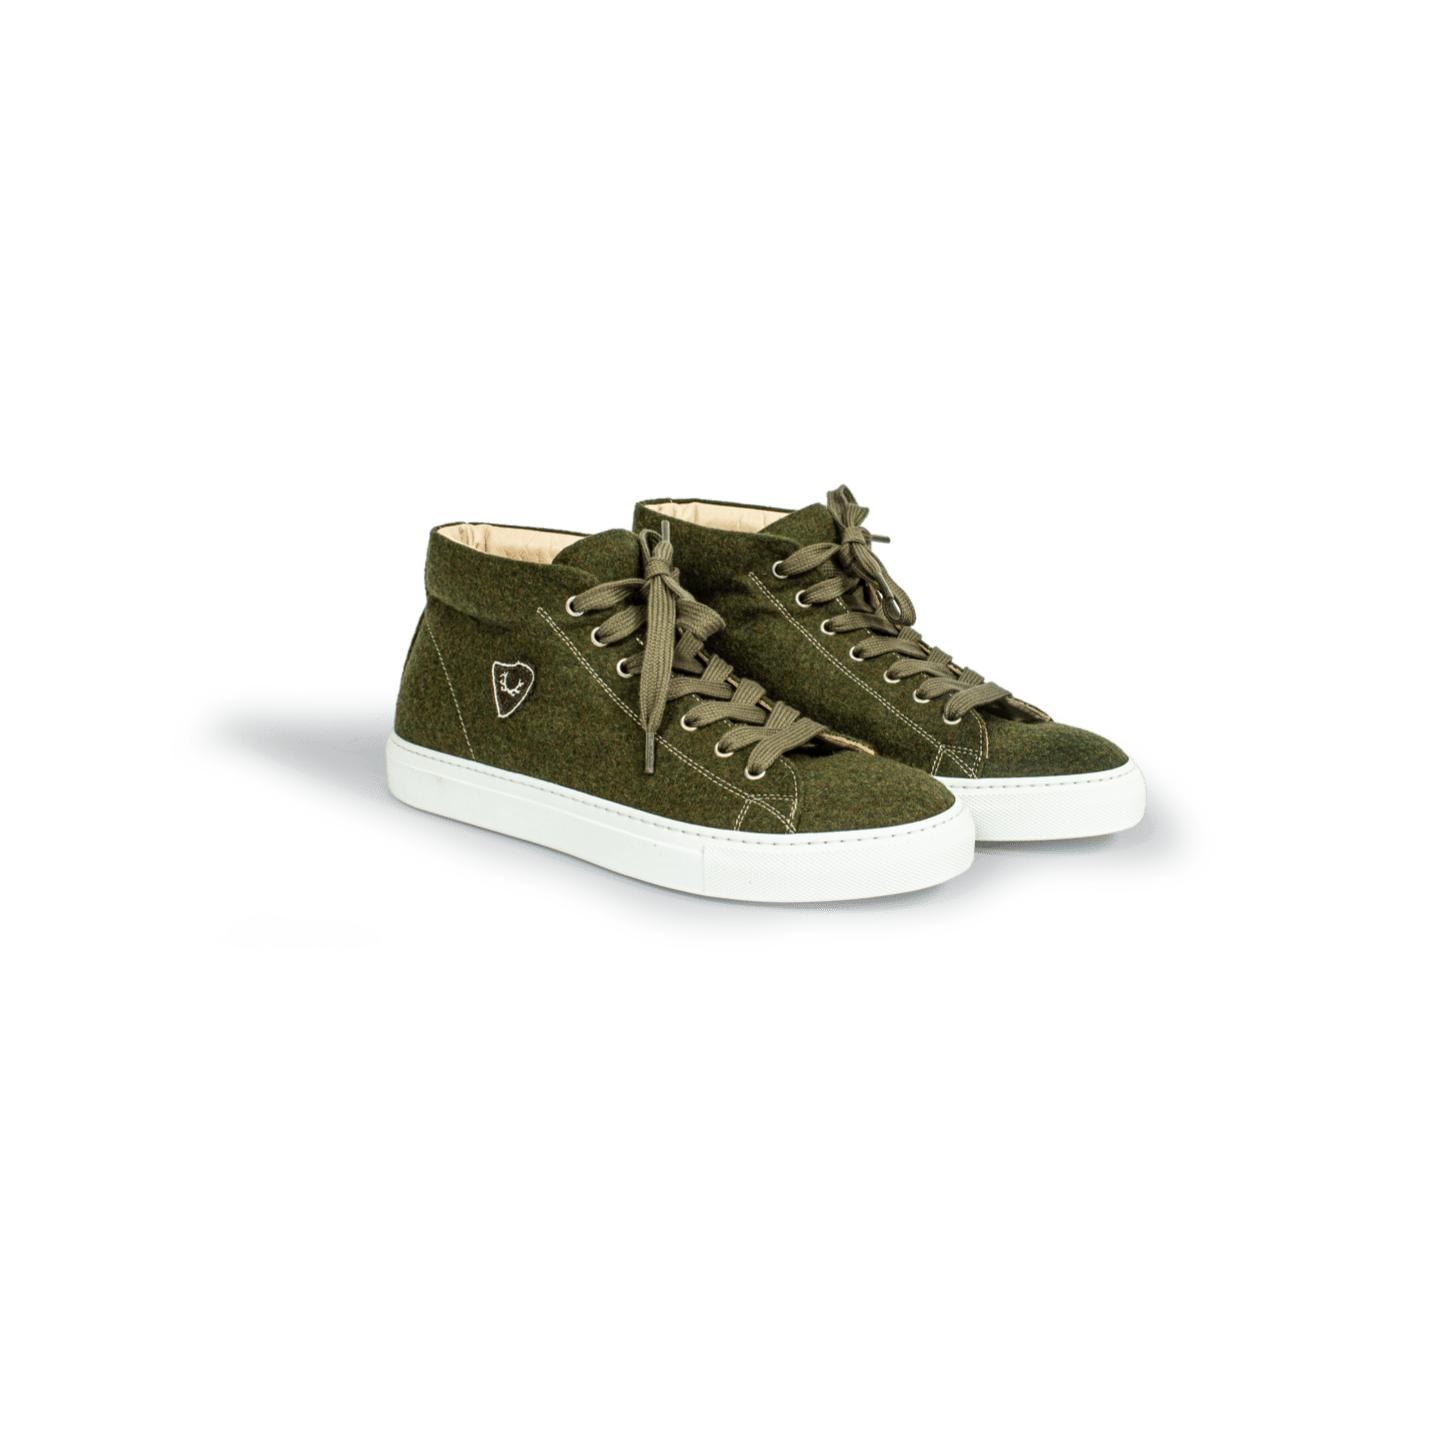 Strizi Schuhe Sneaker grün midcut 2 - Strizi Sneaker green